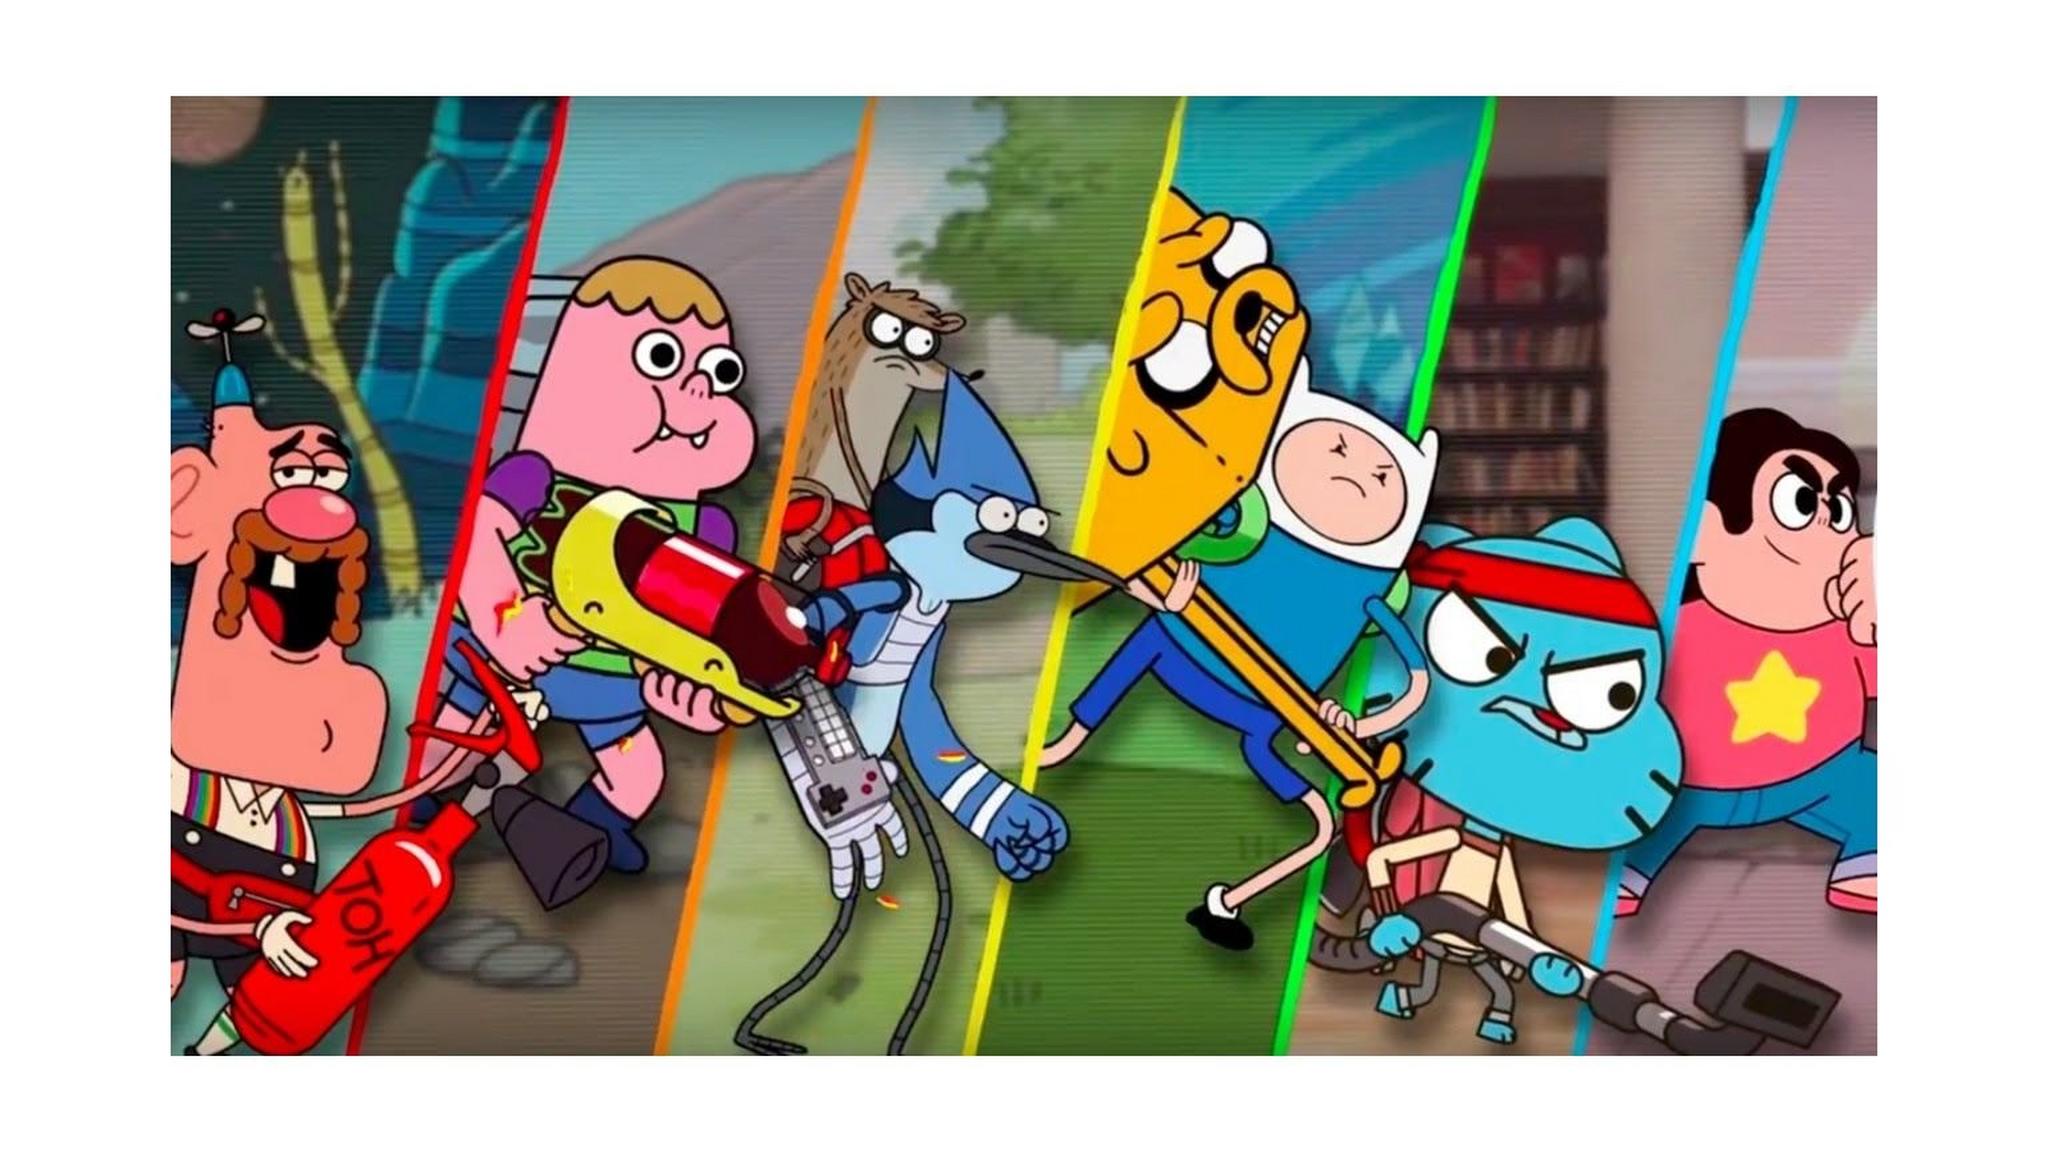 Cartoon Network: Battle Crashers - Xbox One Game